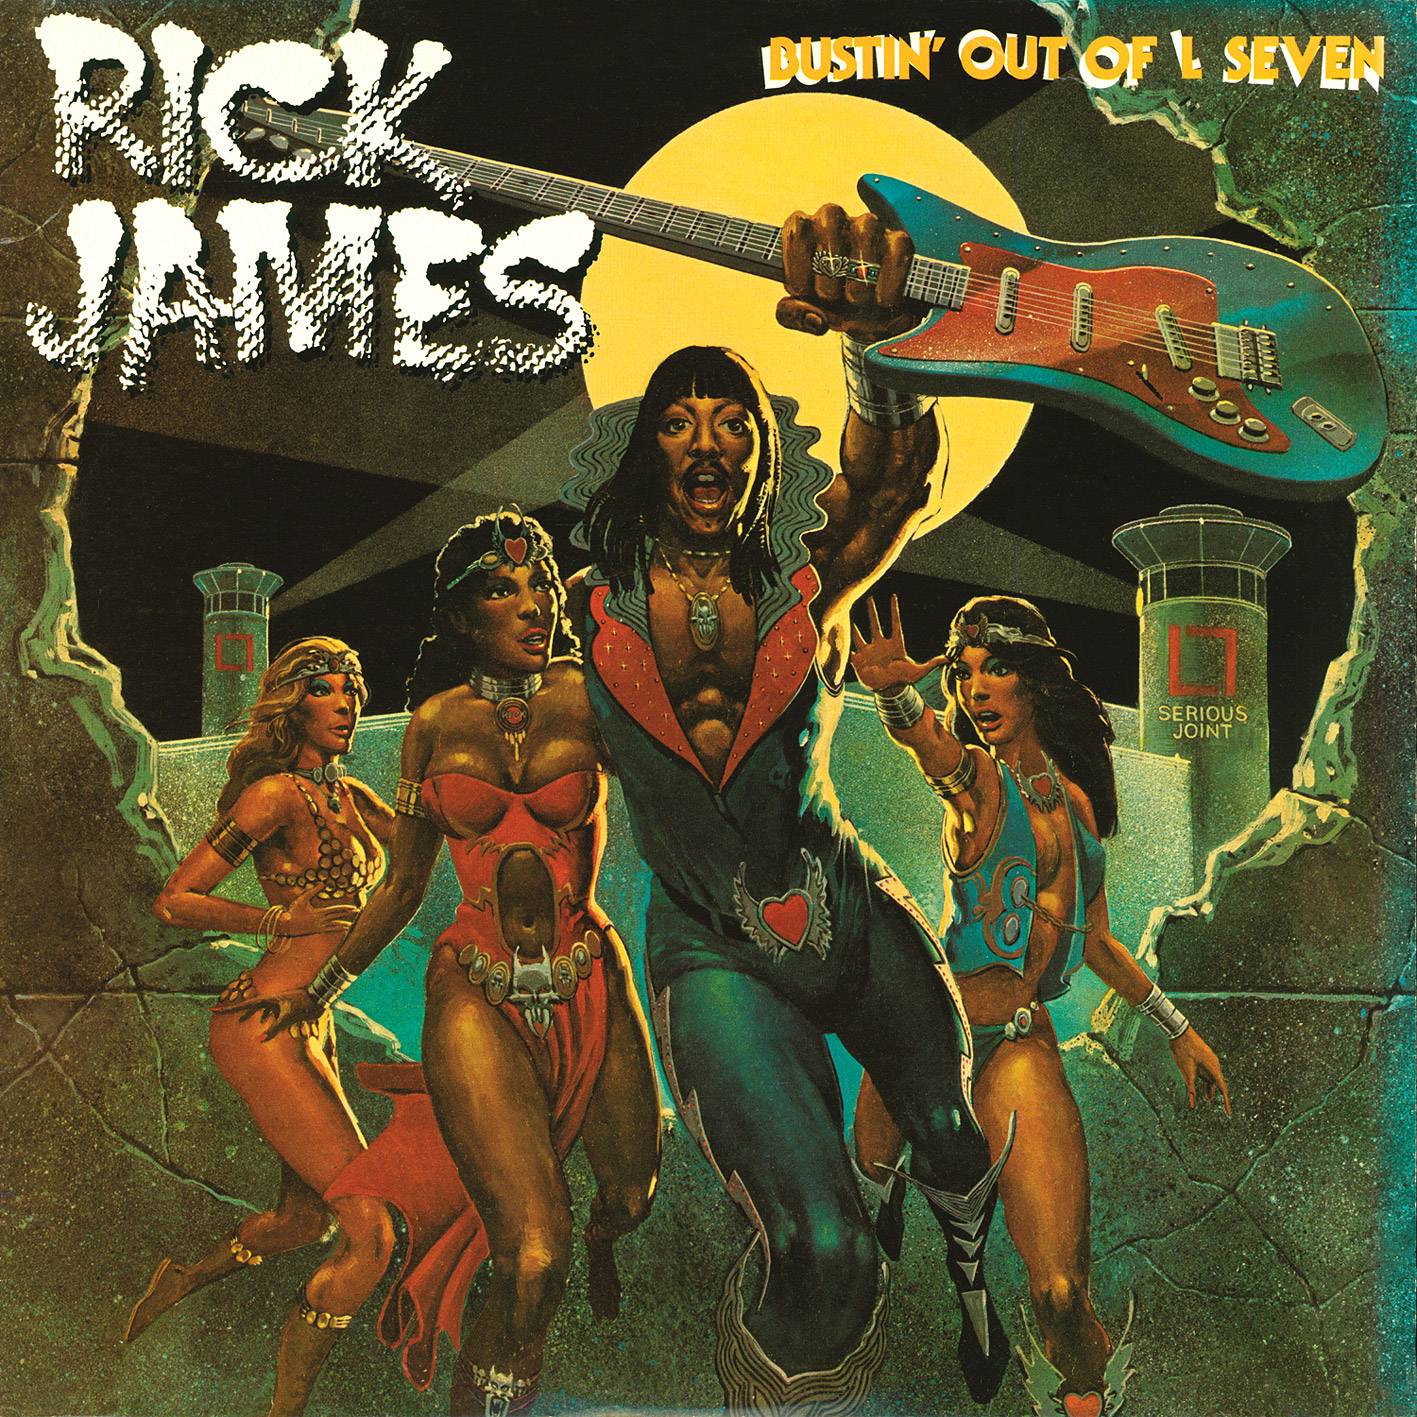 Rick James – Bustin’ Out Of L Seven (1979/2016) [HDTracks FLAC 24-bit/192kHz]